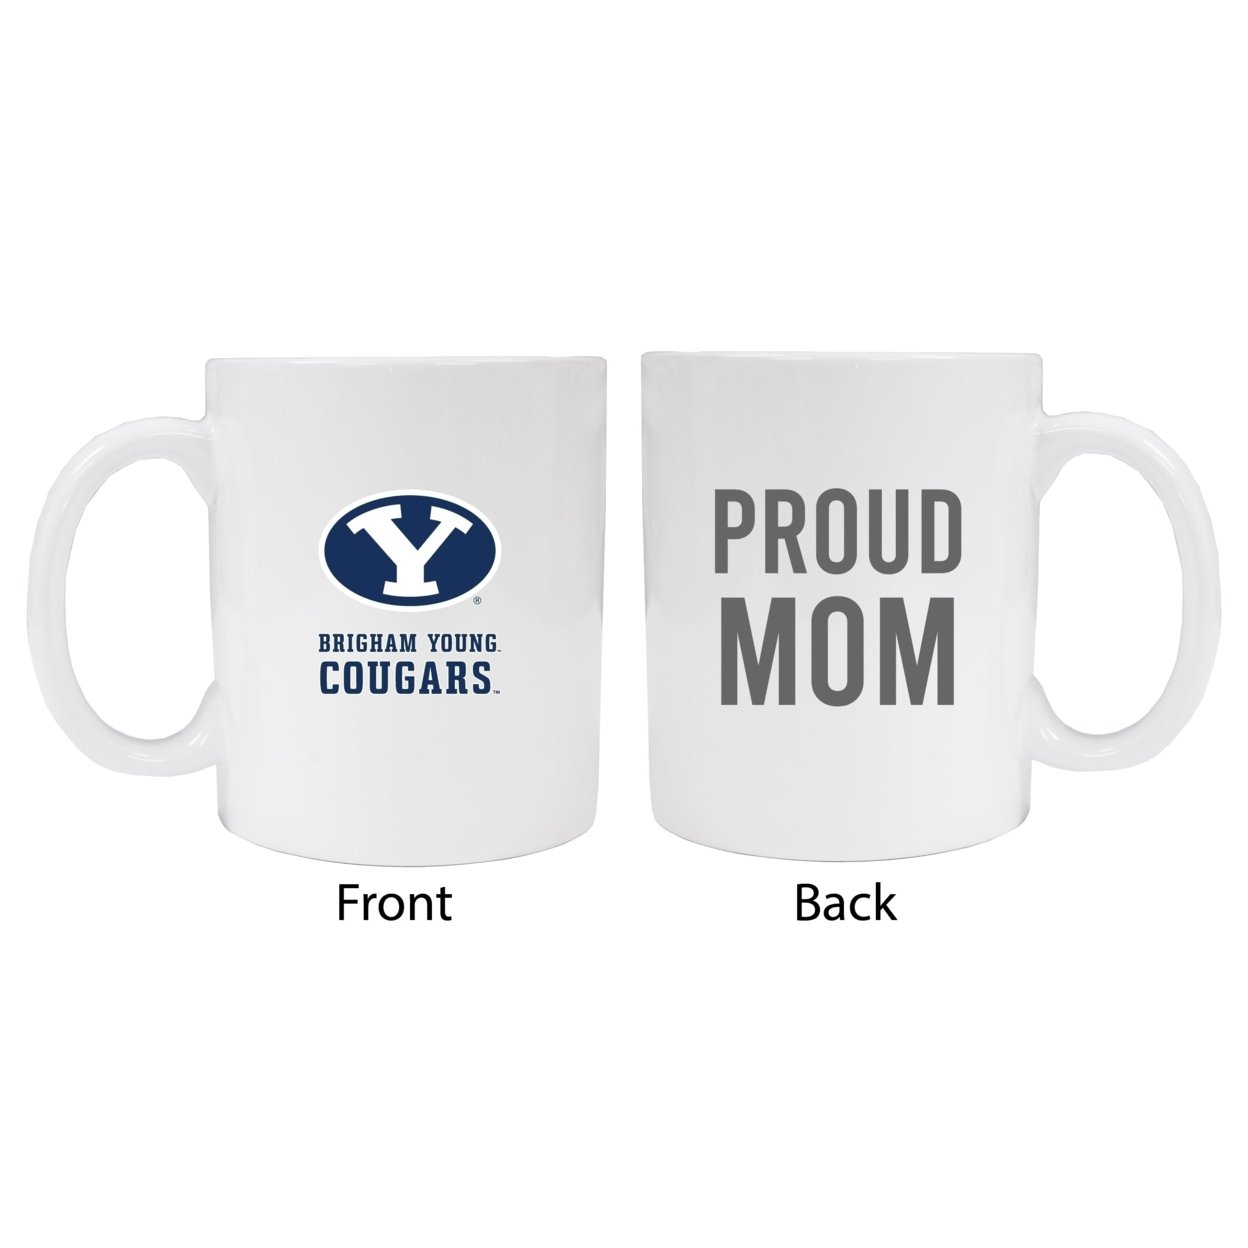 Brigham Young Cougars Proud Mom Ceramic Coffee Mug - White (2 Pack)